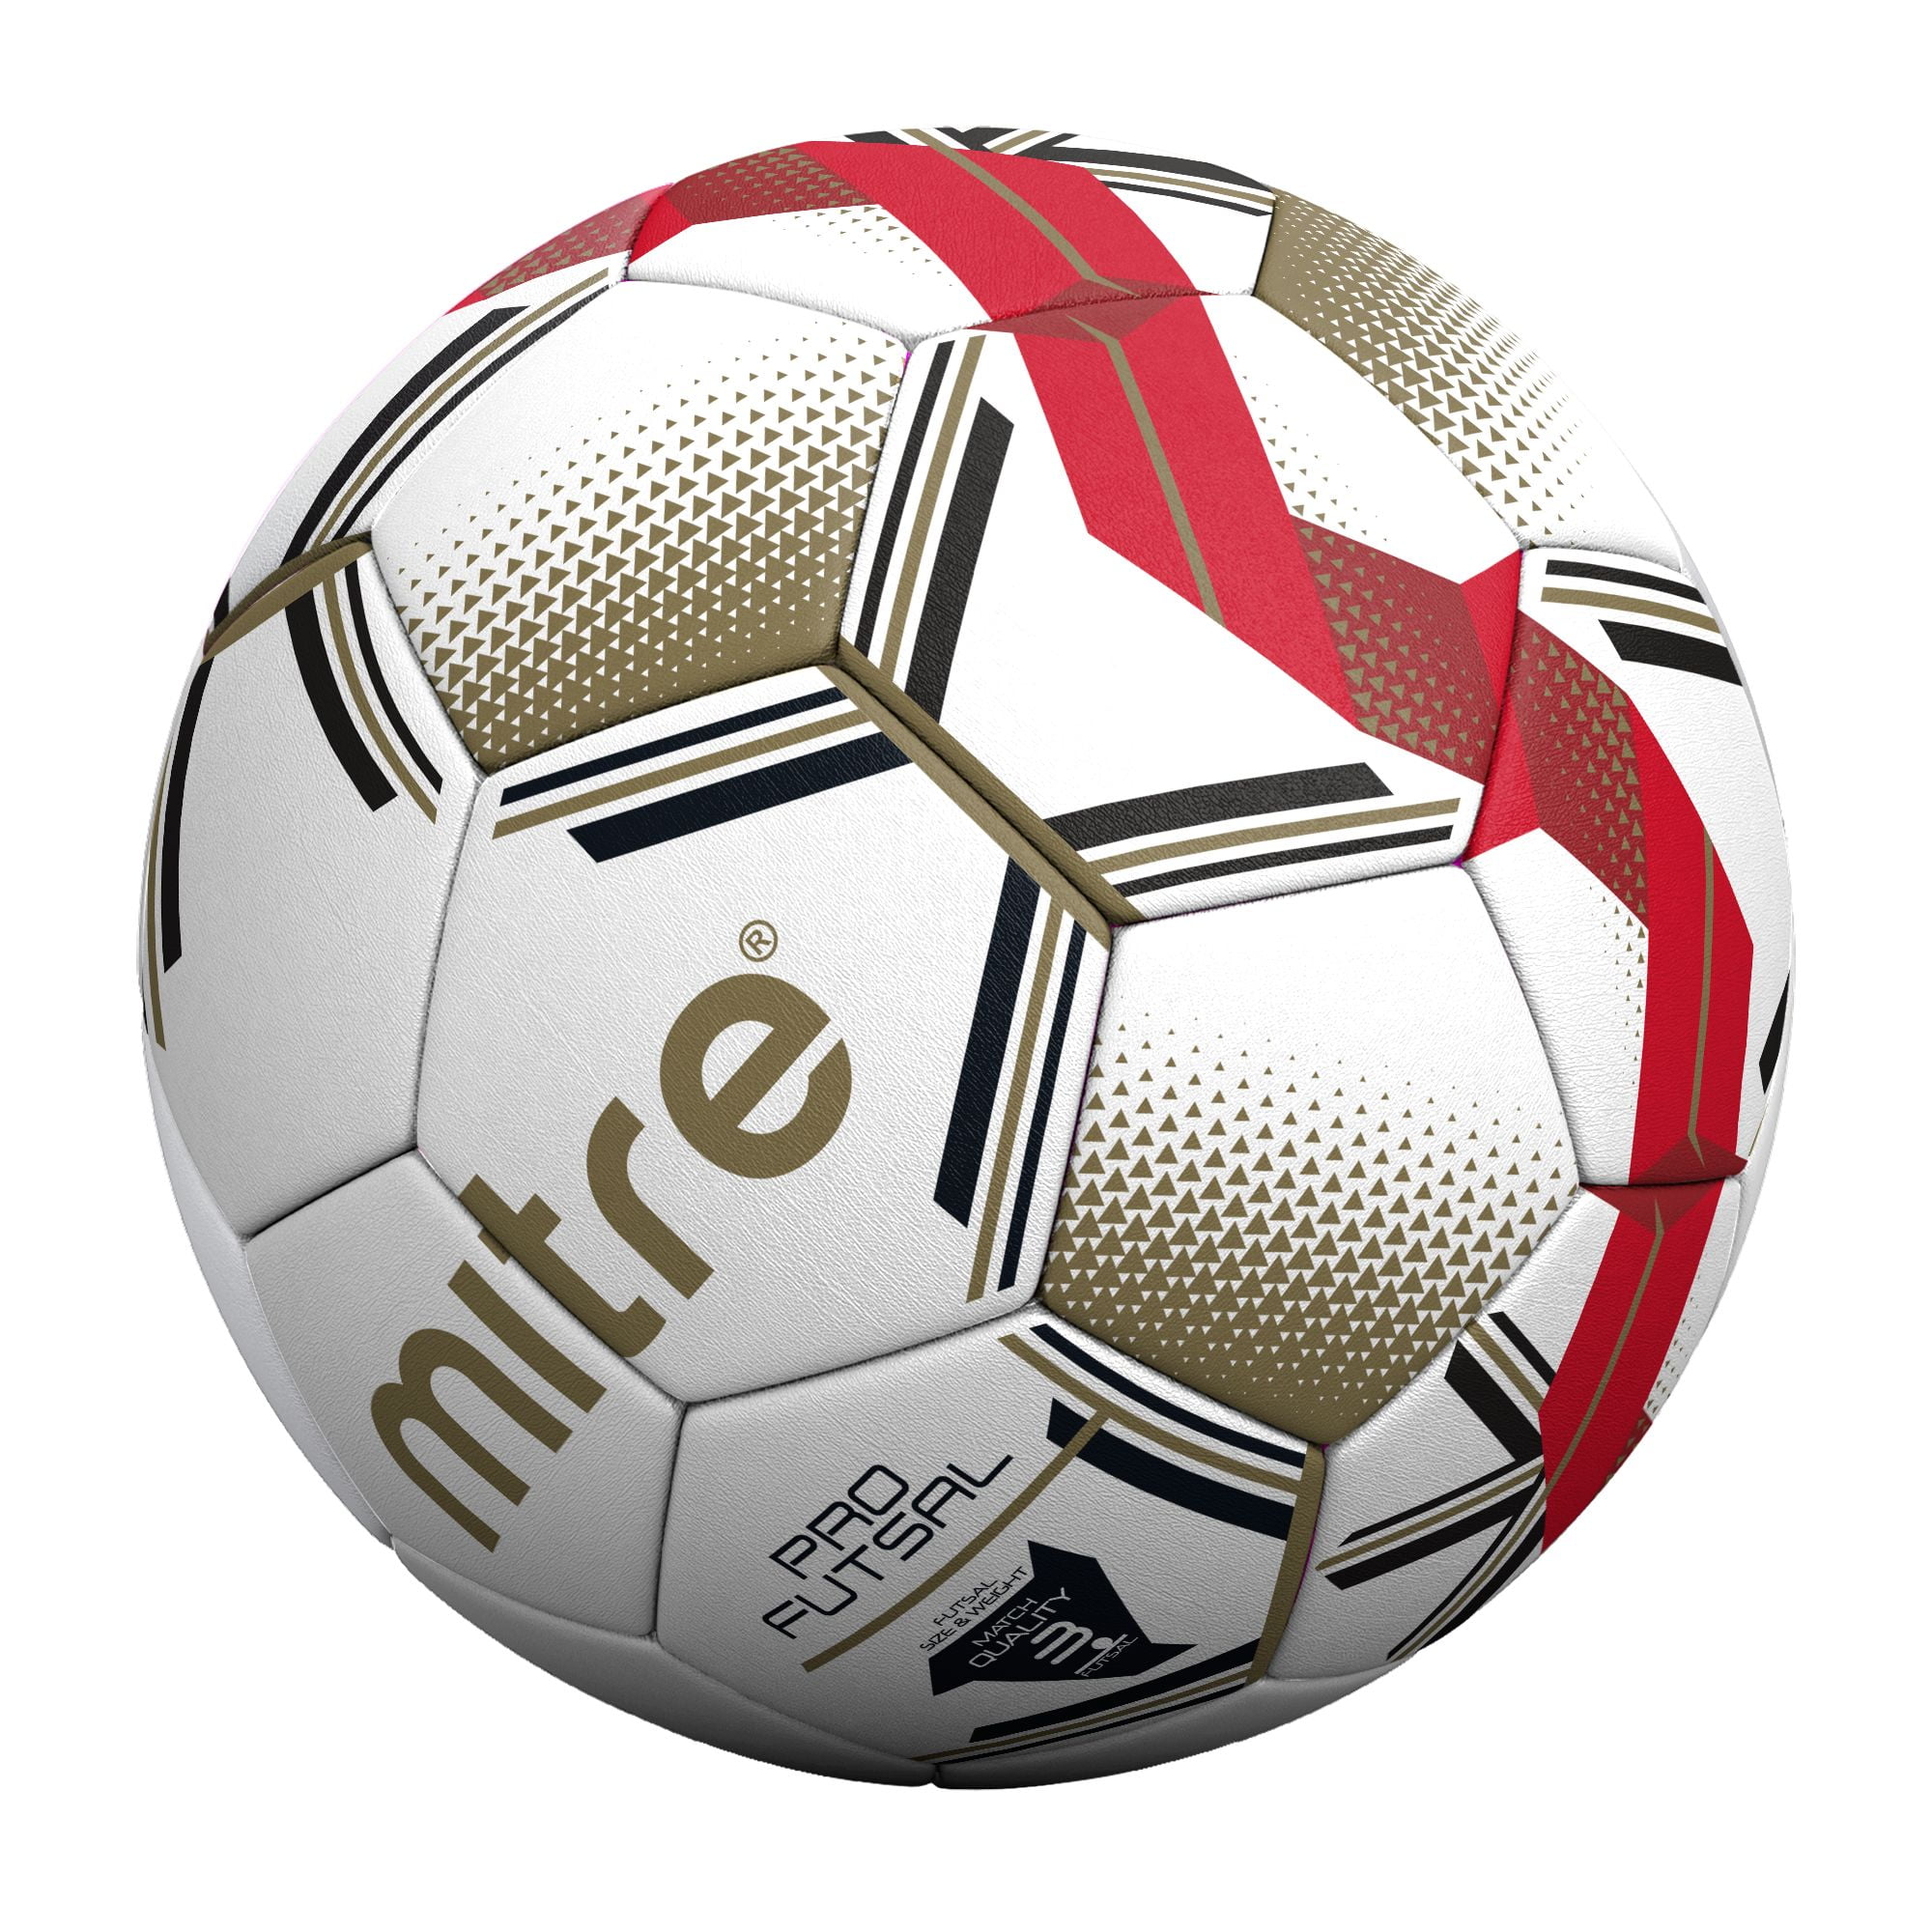 Mitre Pro Futsal Soccerball, Size 4